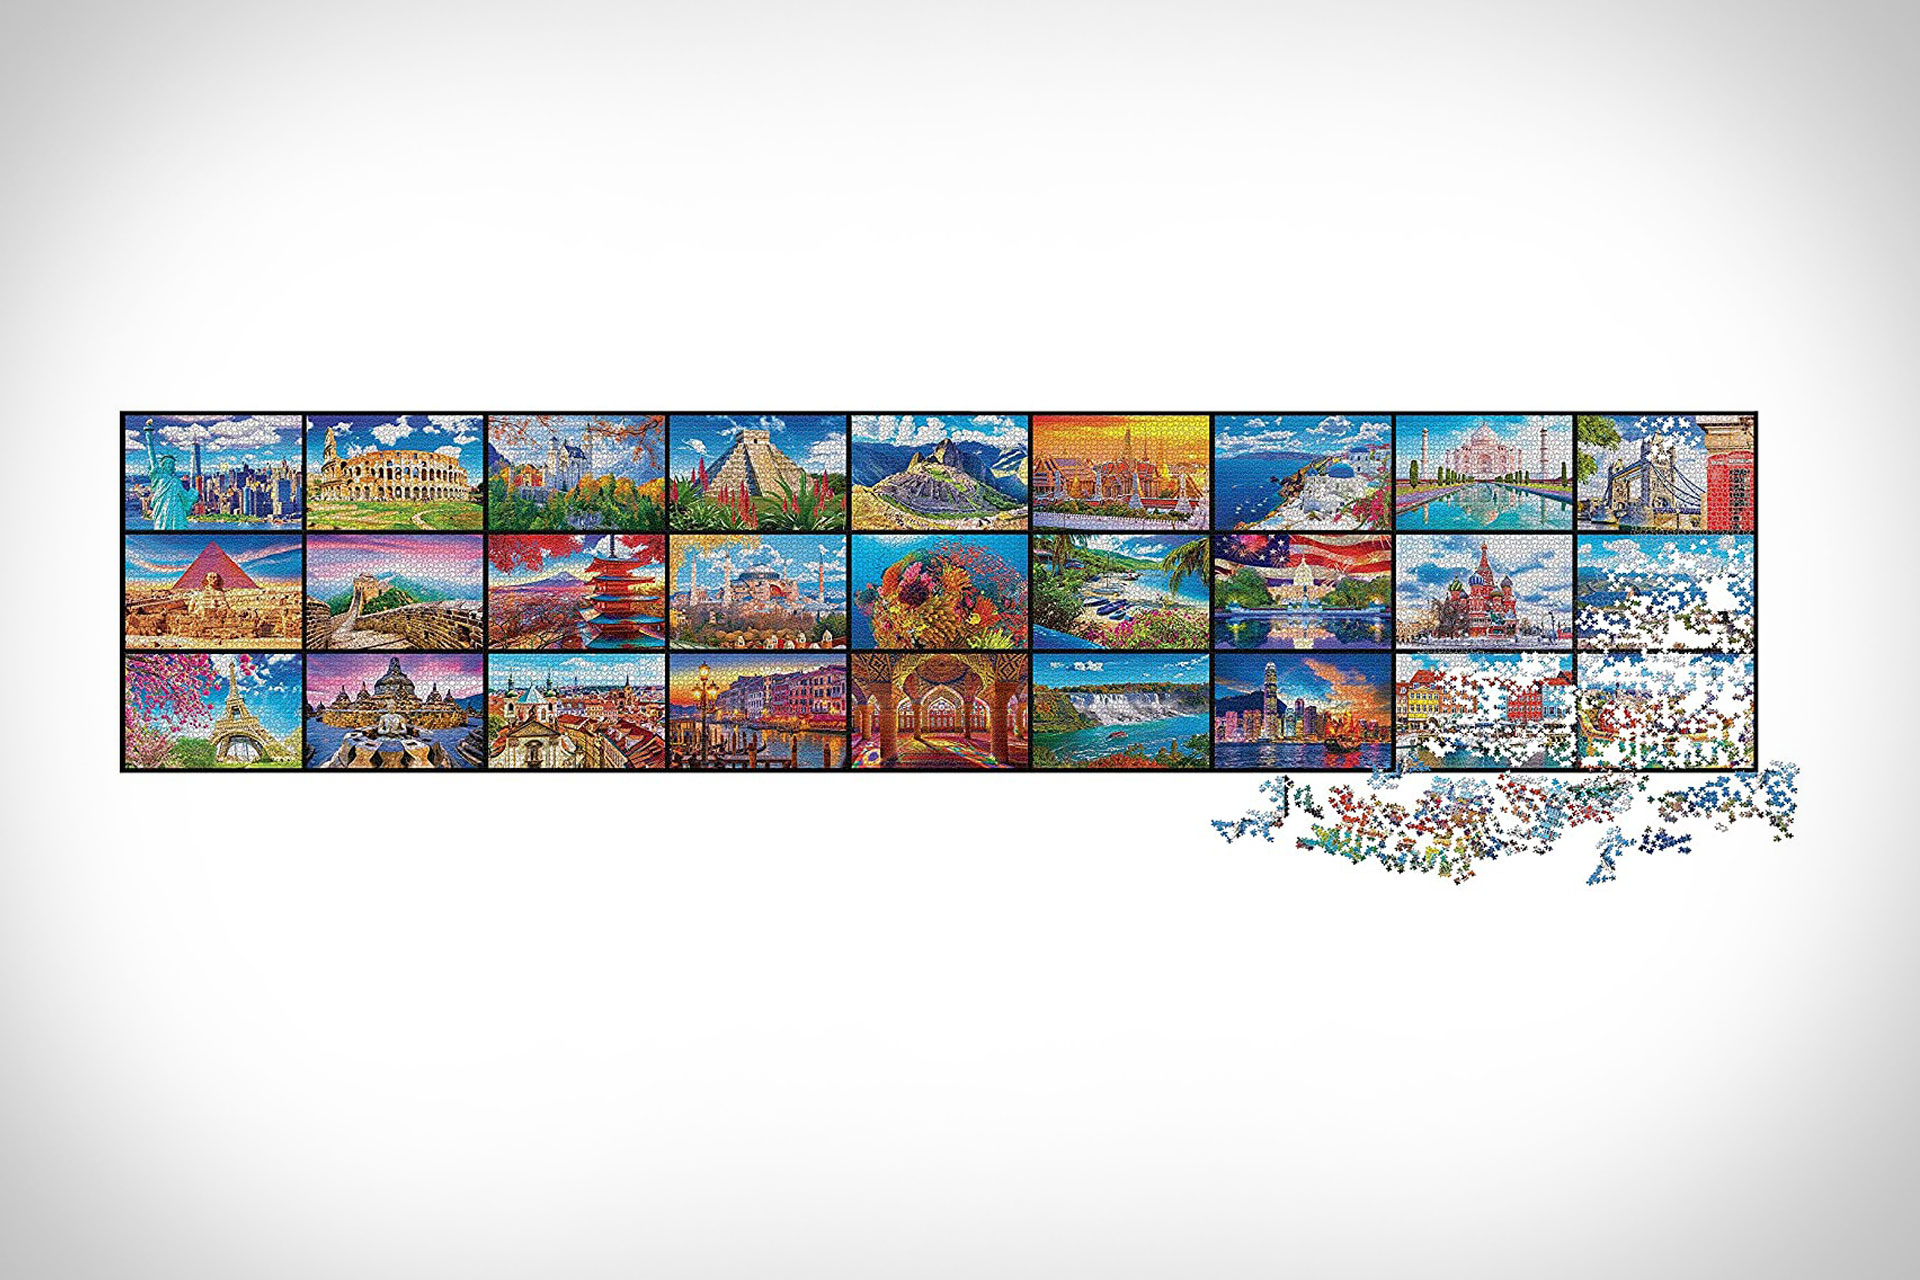  KODAK Premium Puzzle Presents: The World's Largest